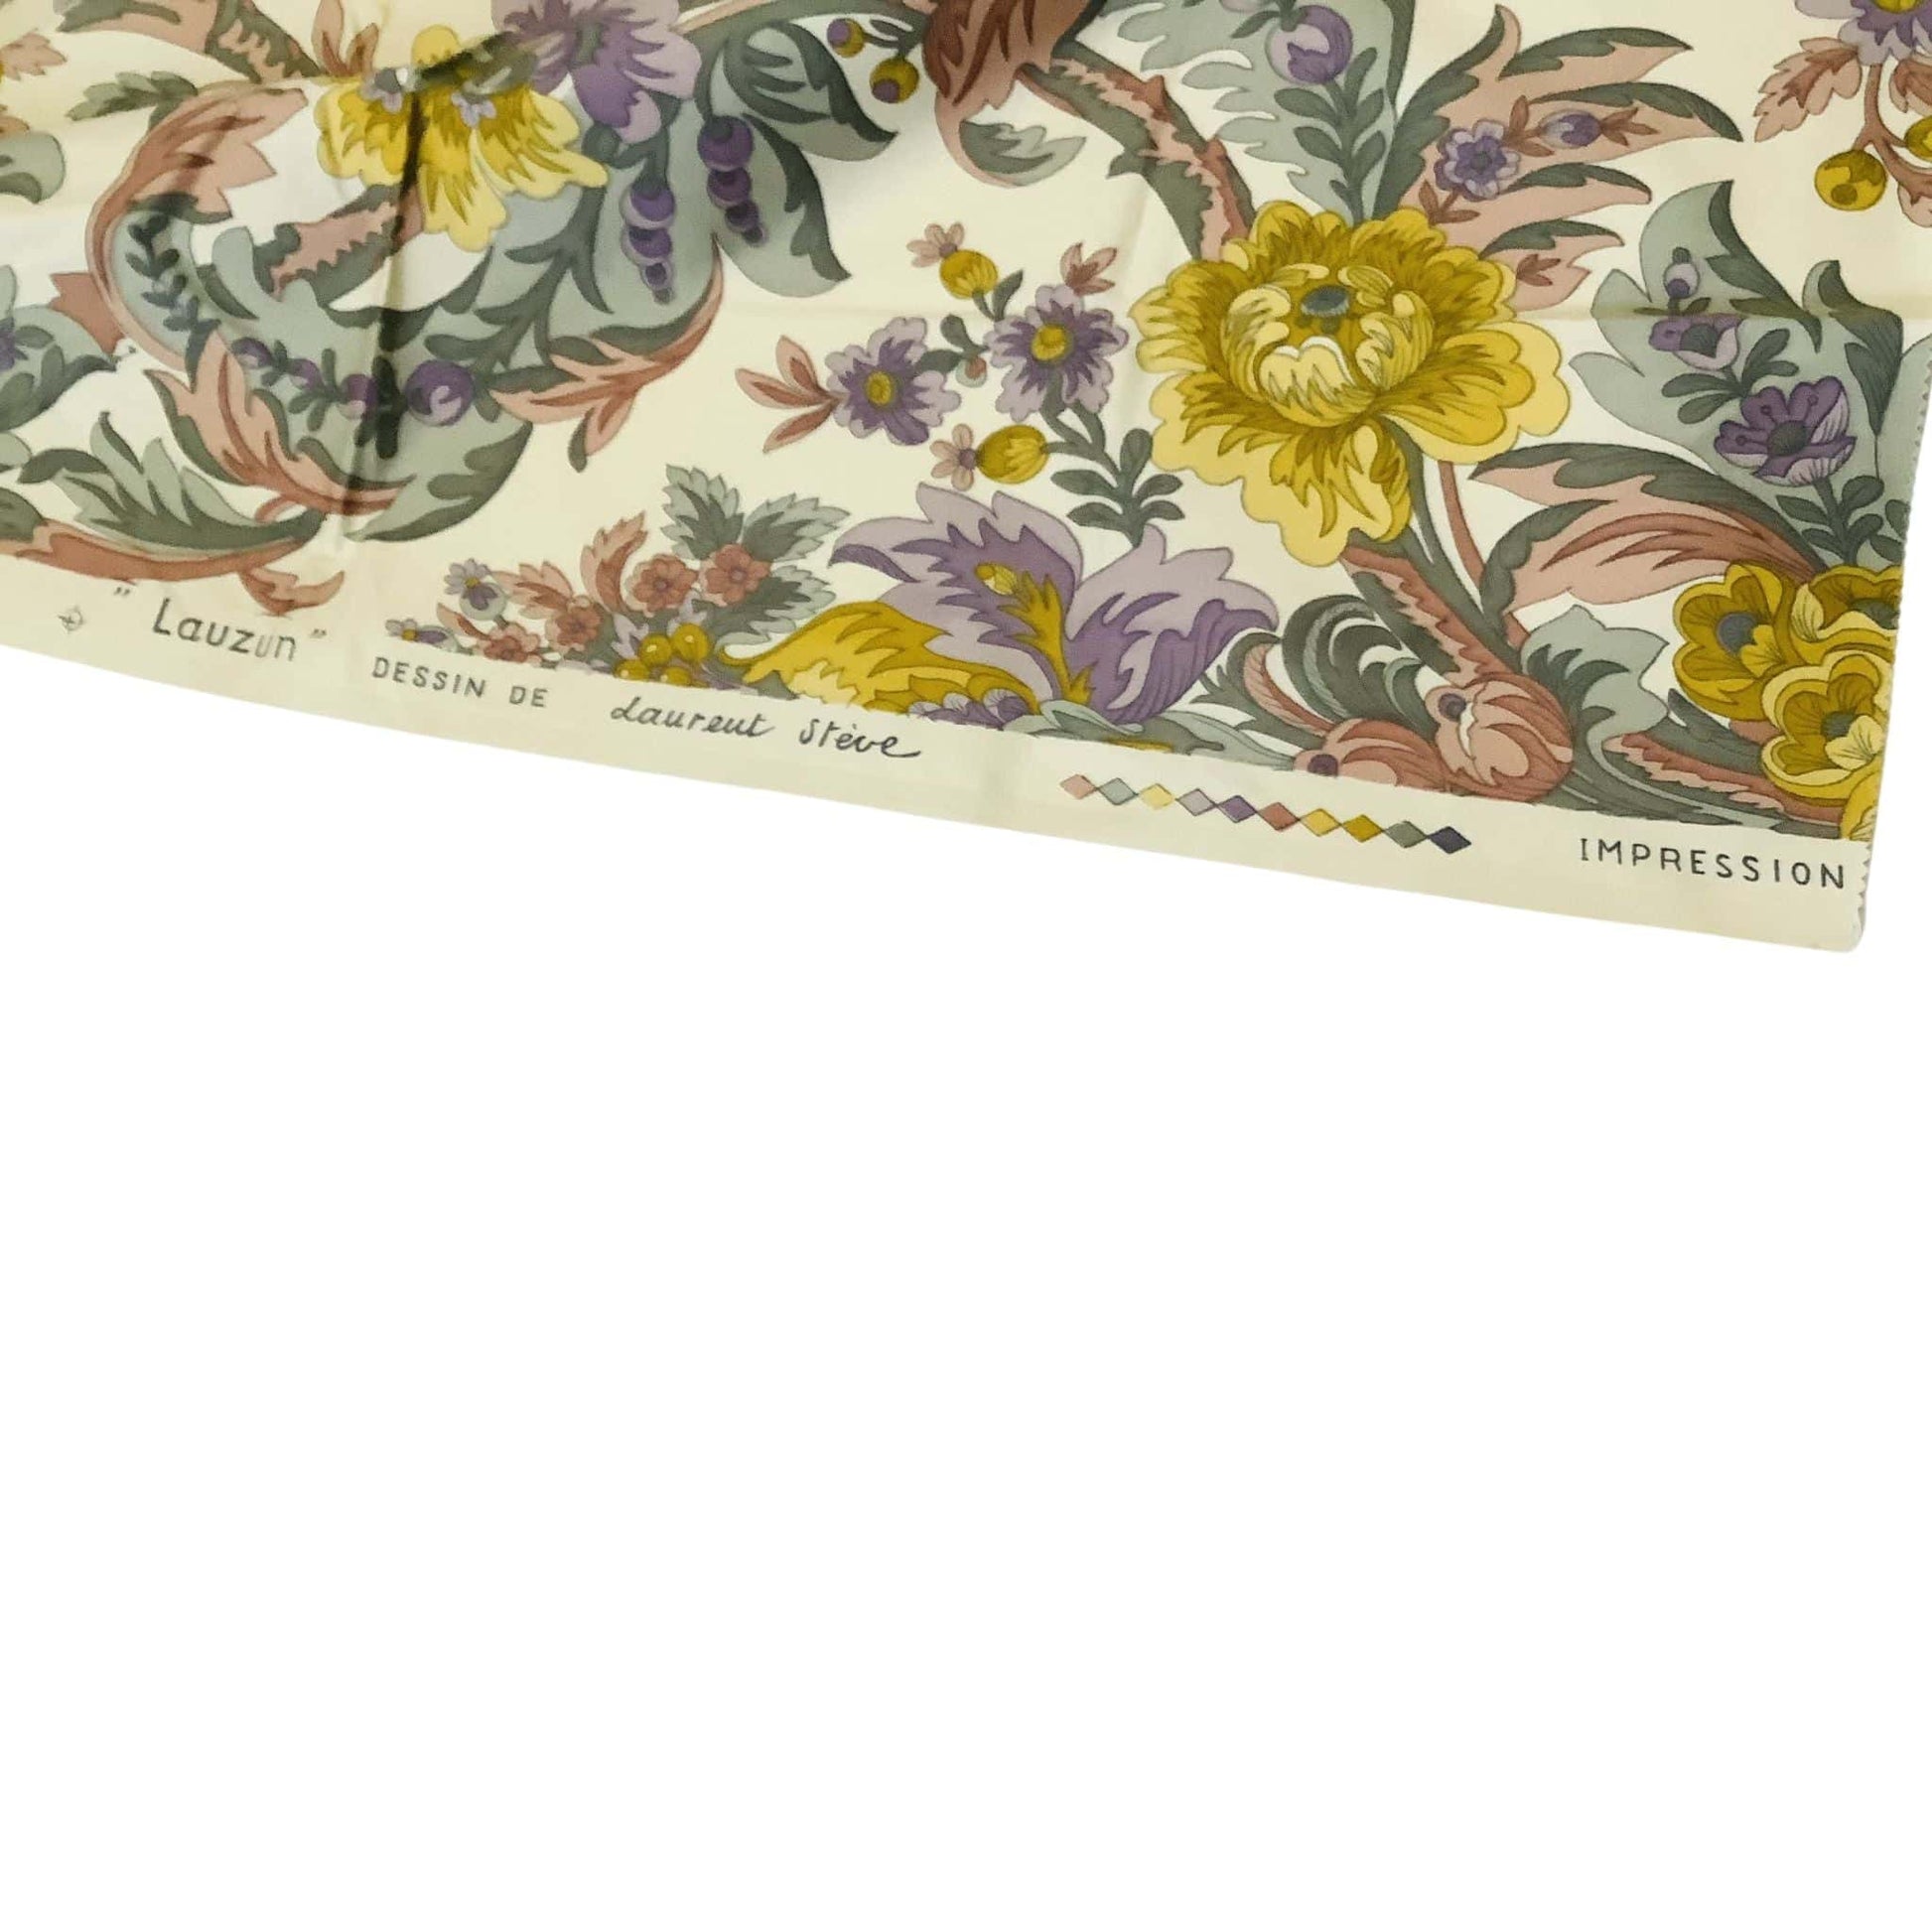 Neoclassical Fabric Sample Multi / Cotton / Vintage 1980s